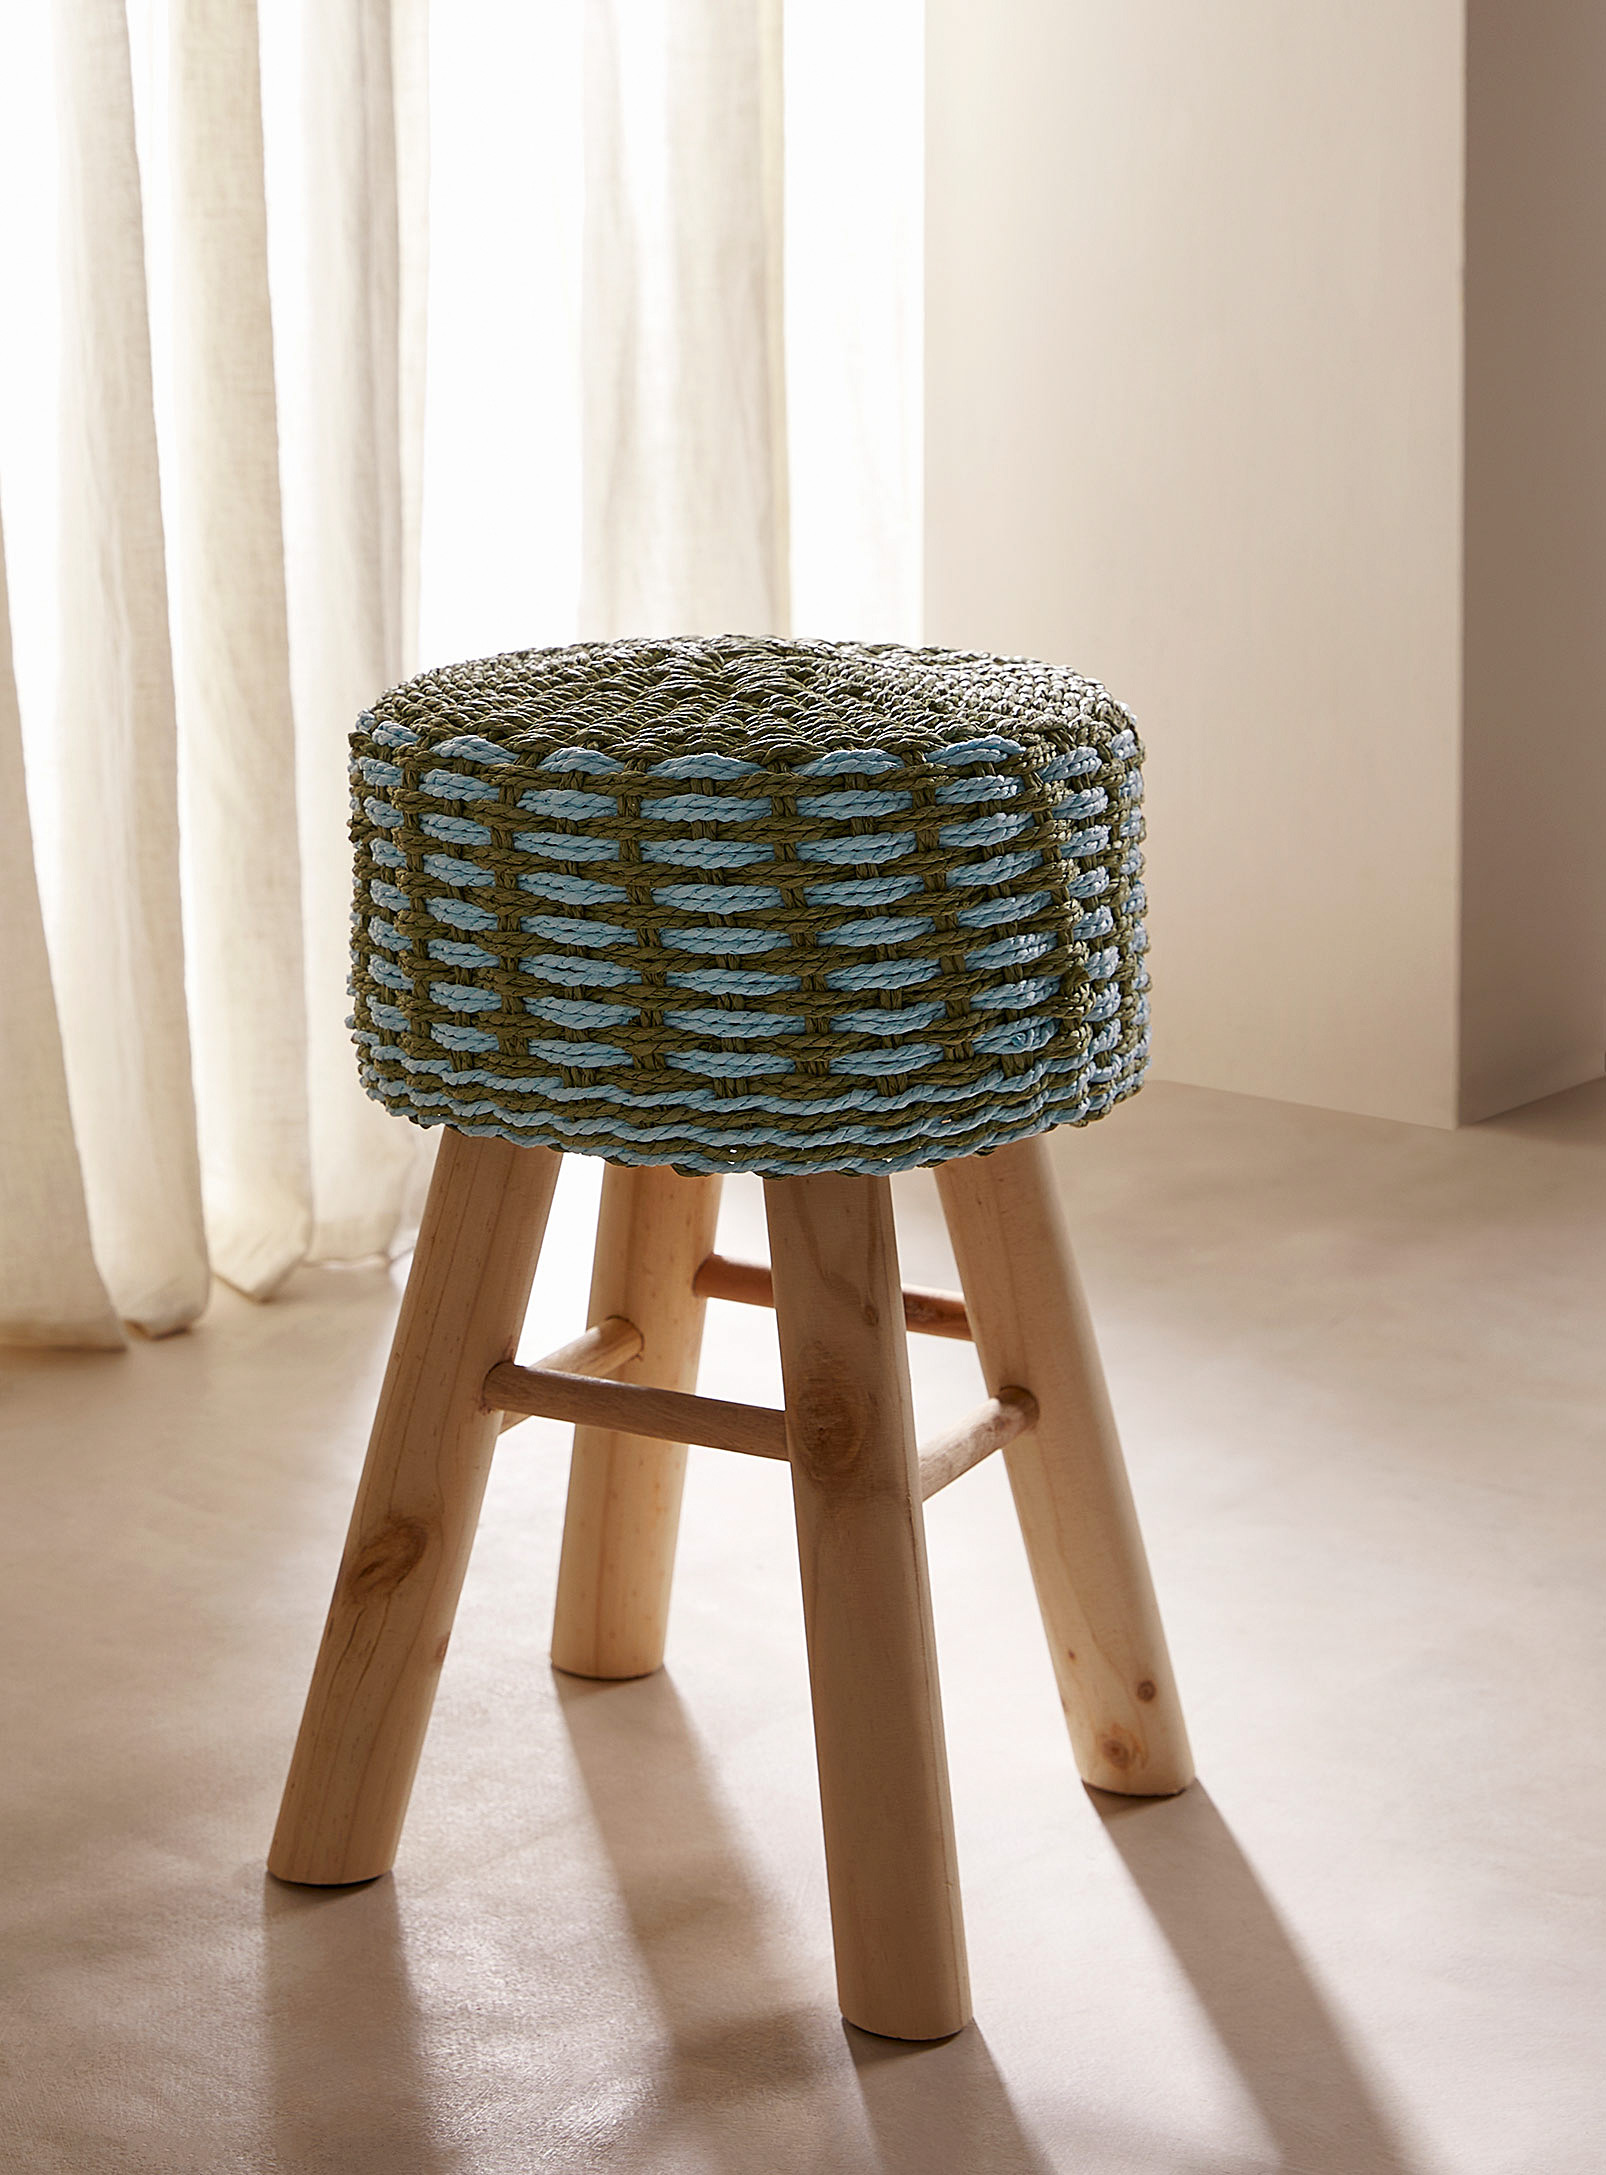 Simons Maison - Wood and string decorative stool